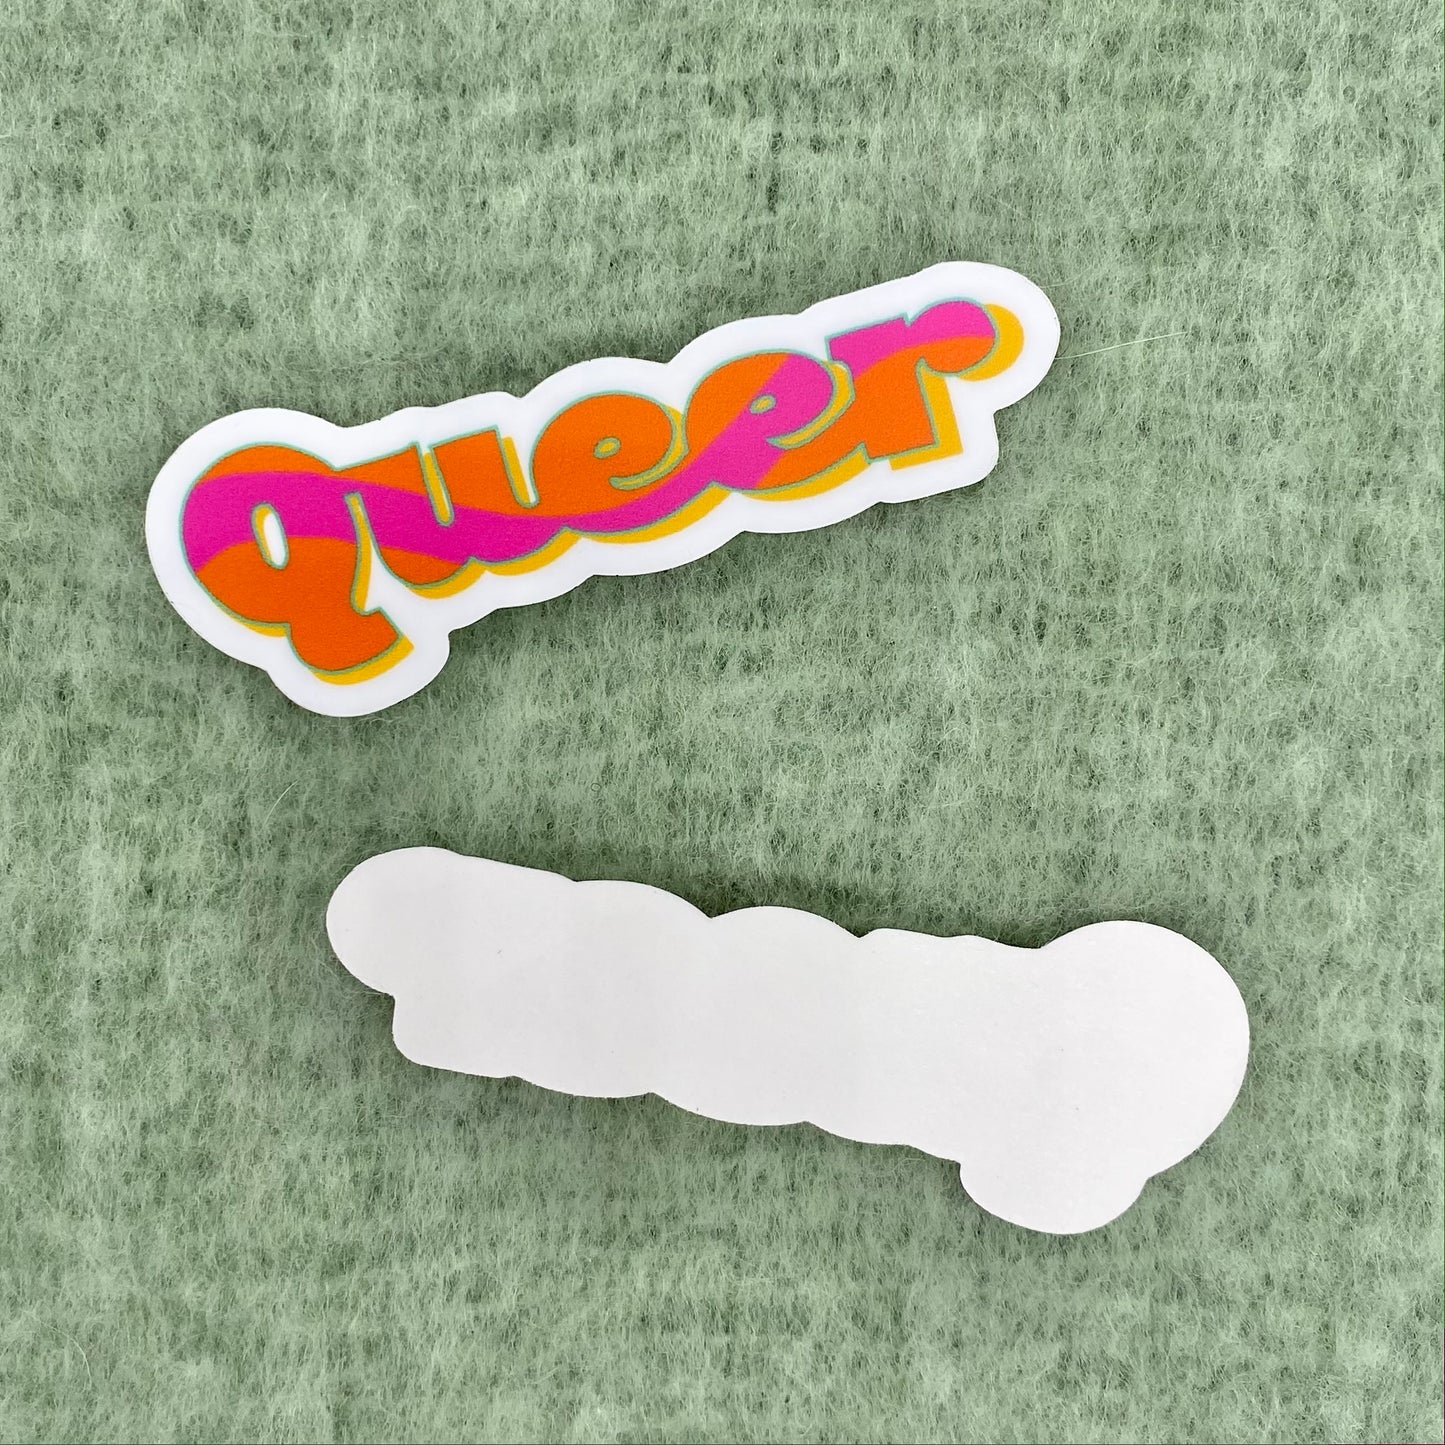 Sticker: Queer